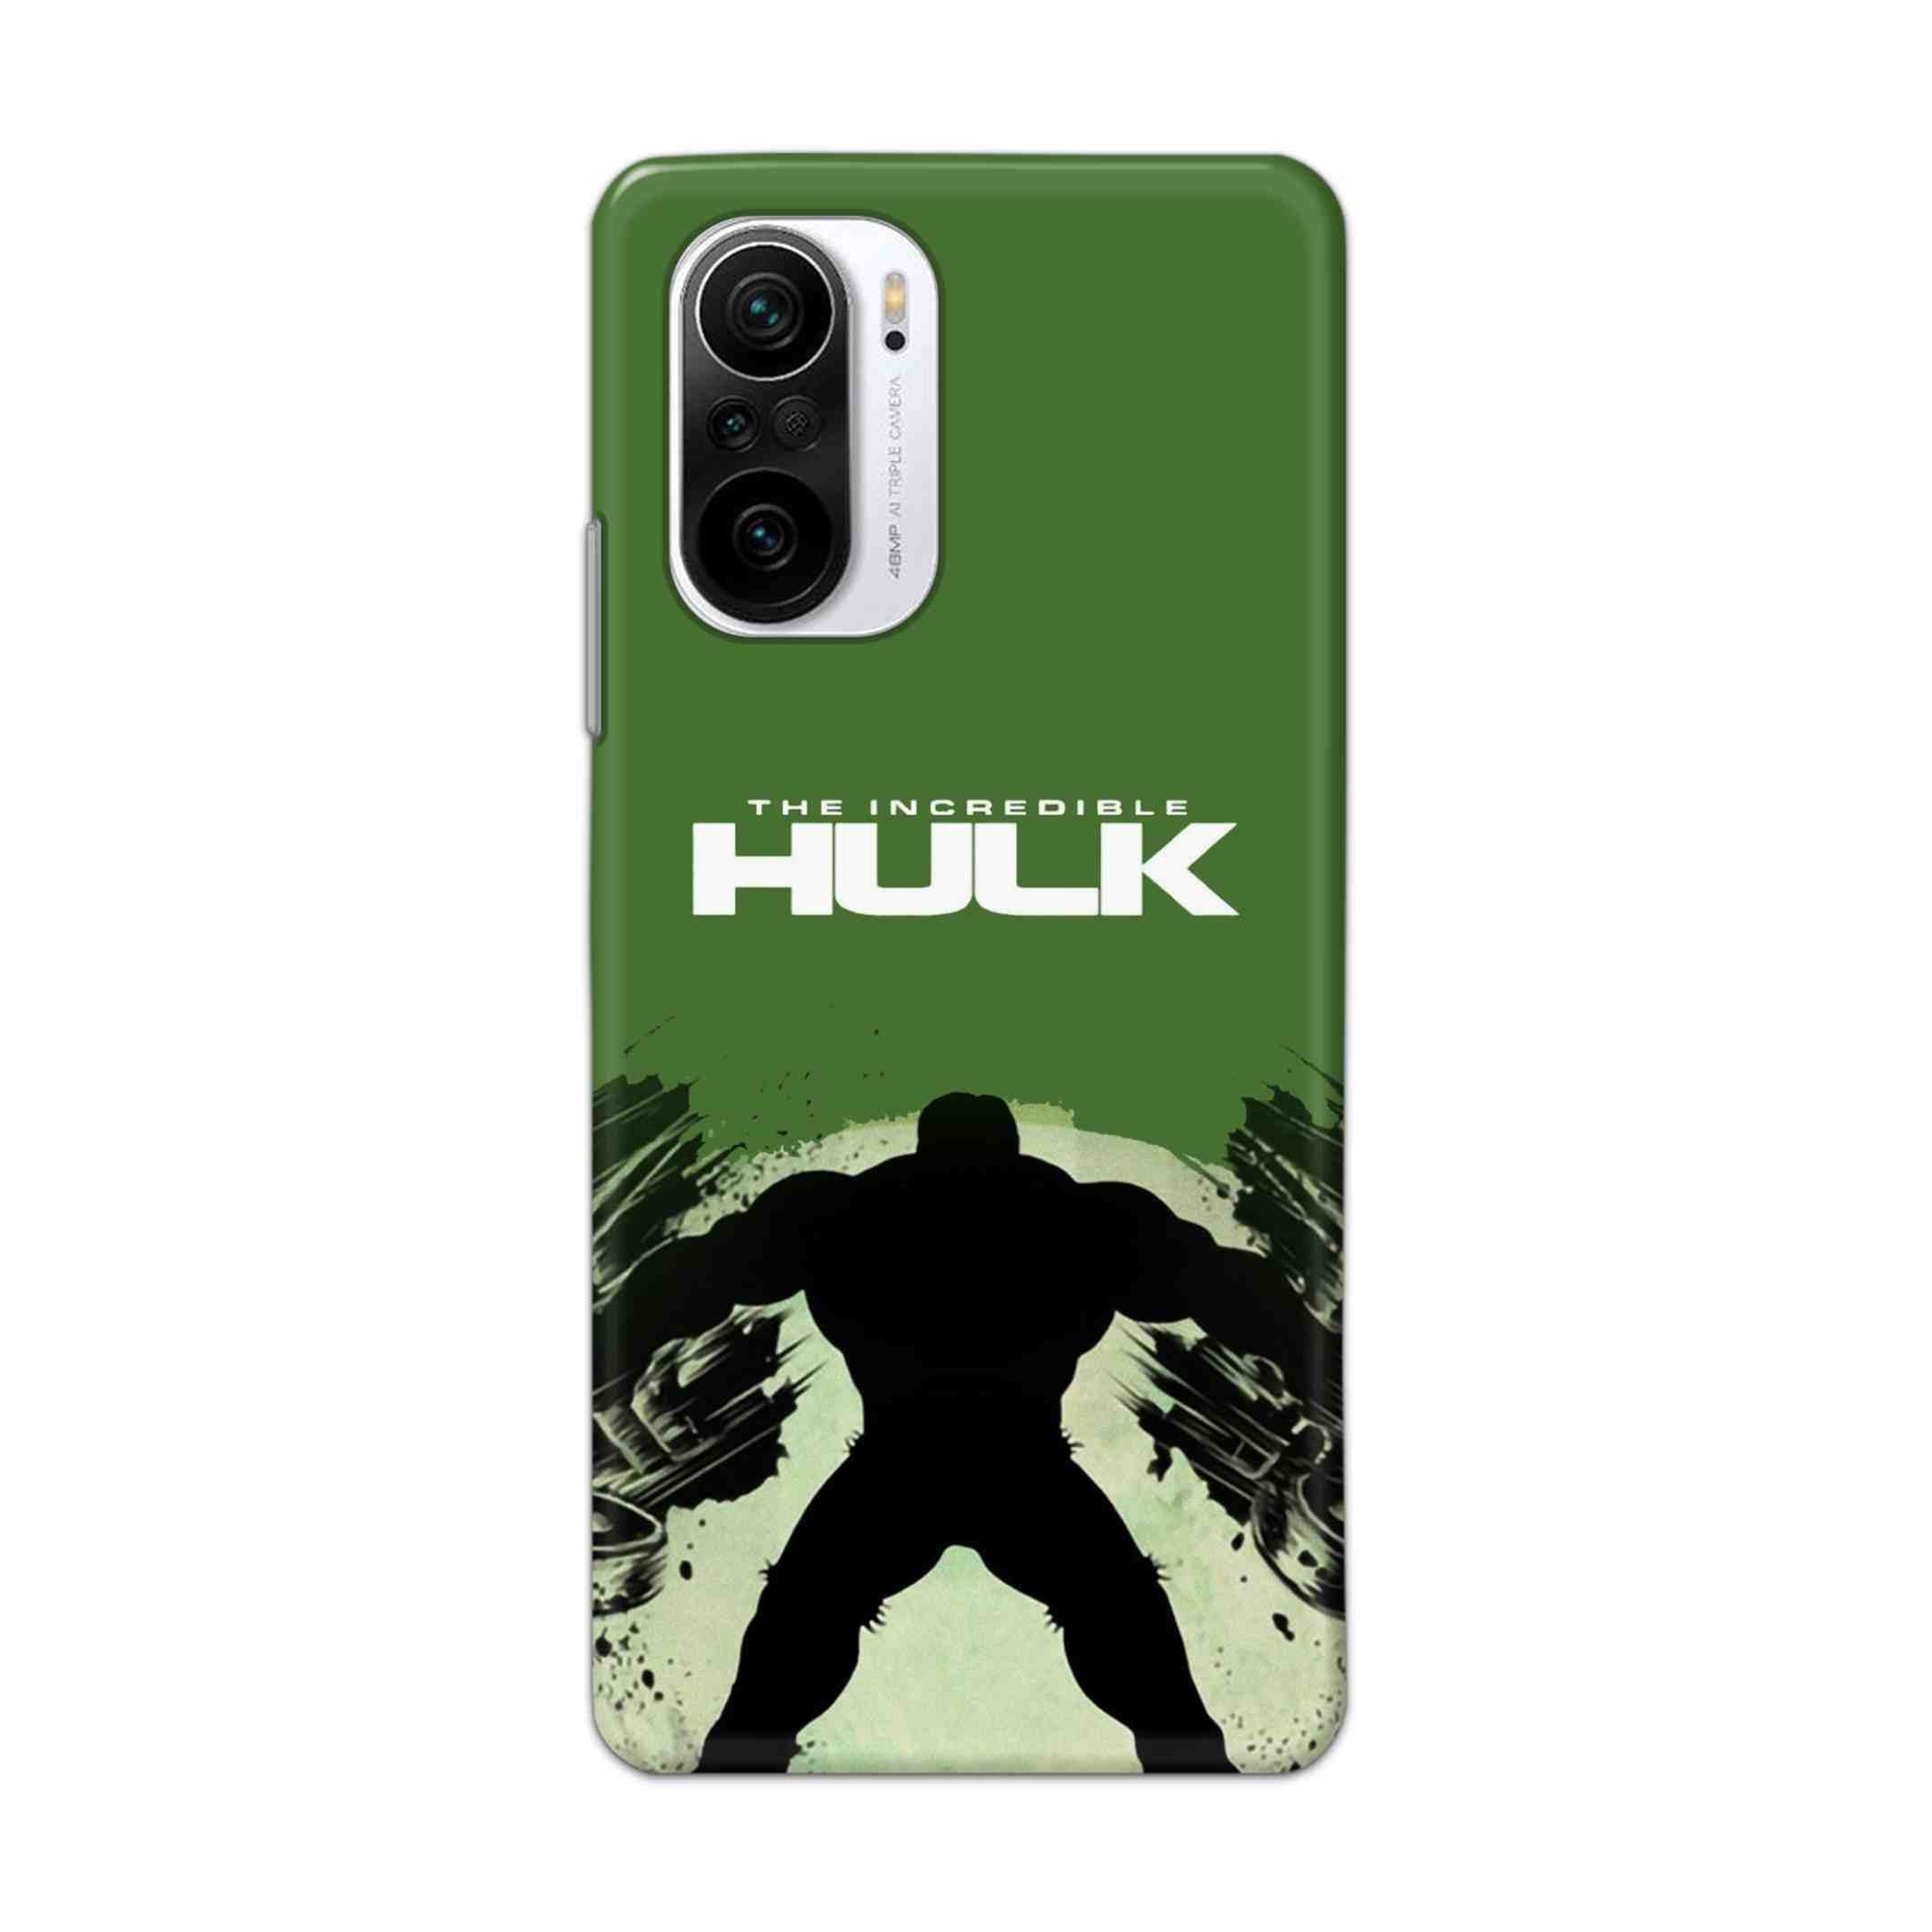 Buy Hulk Hard Back Mobile Phone Case Cover For Mi 11X Online